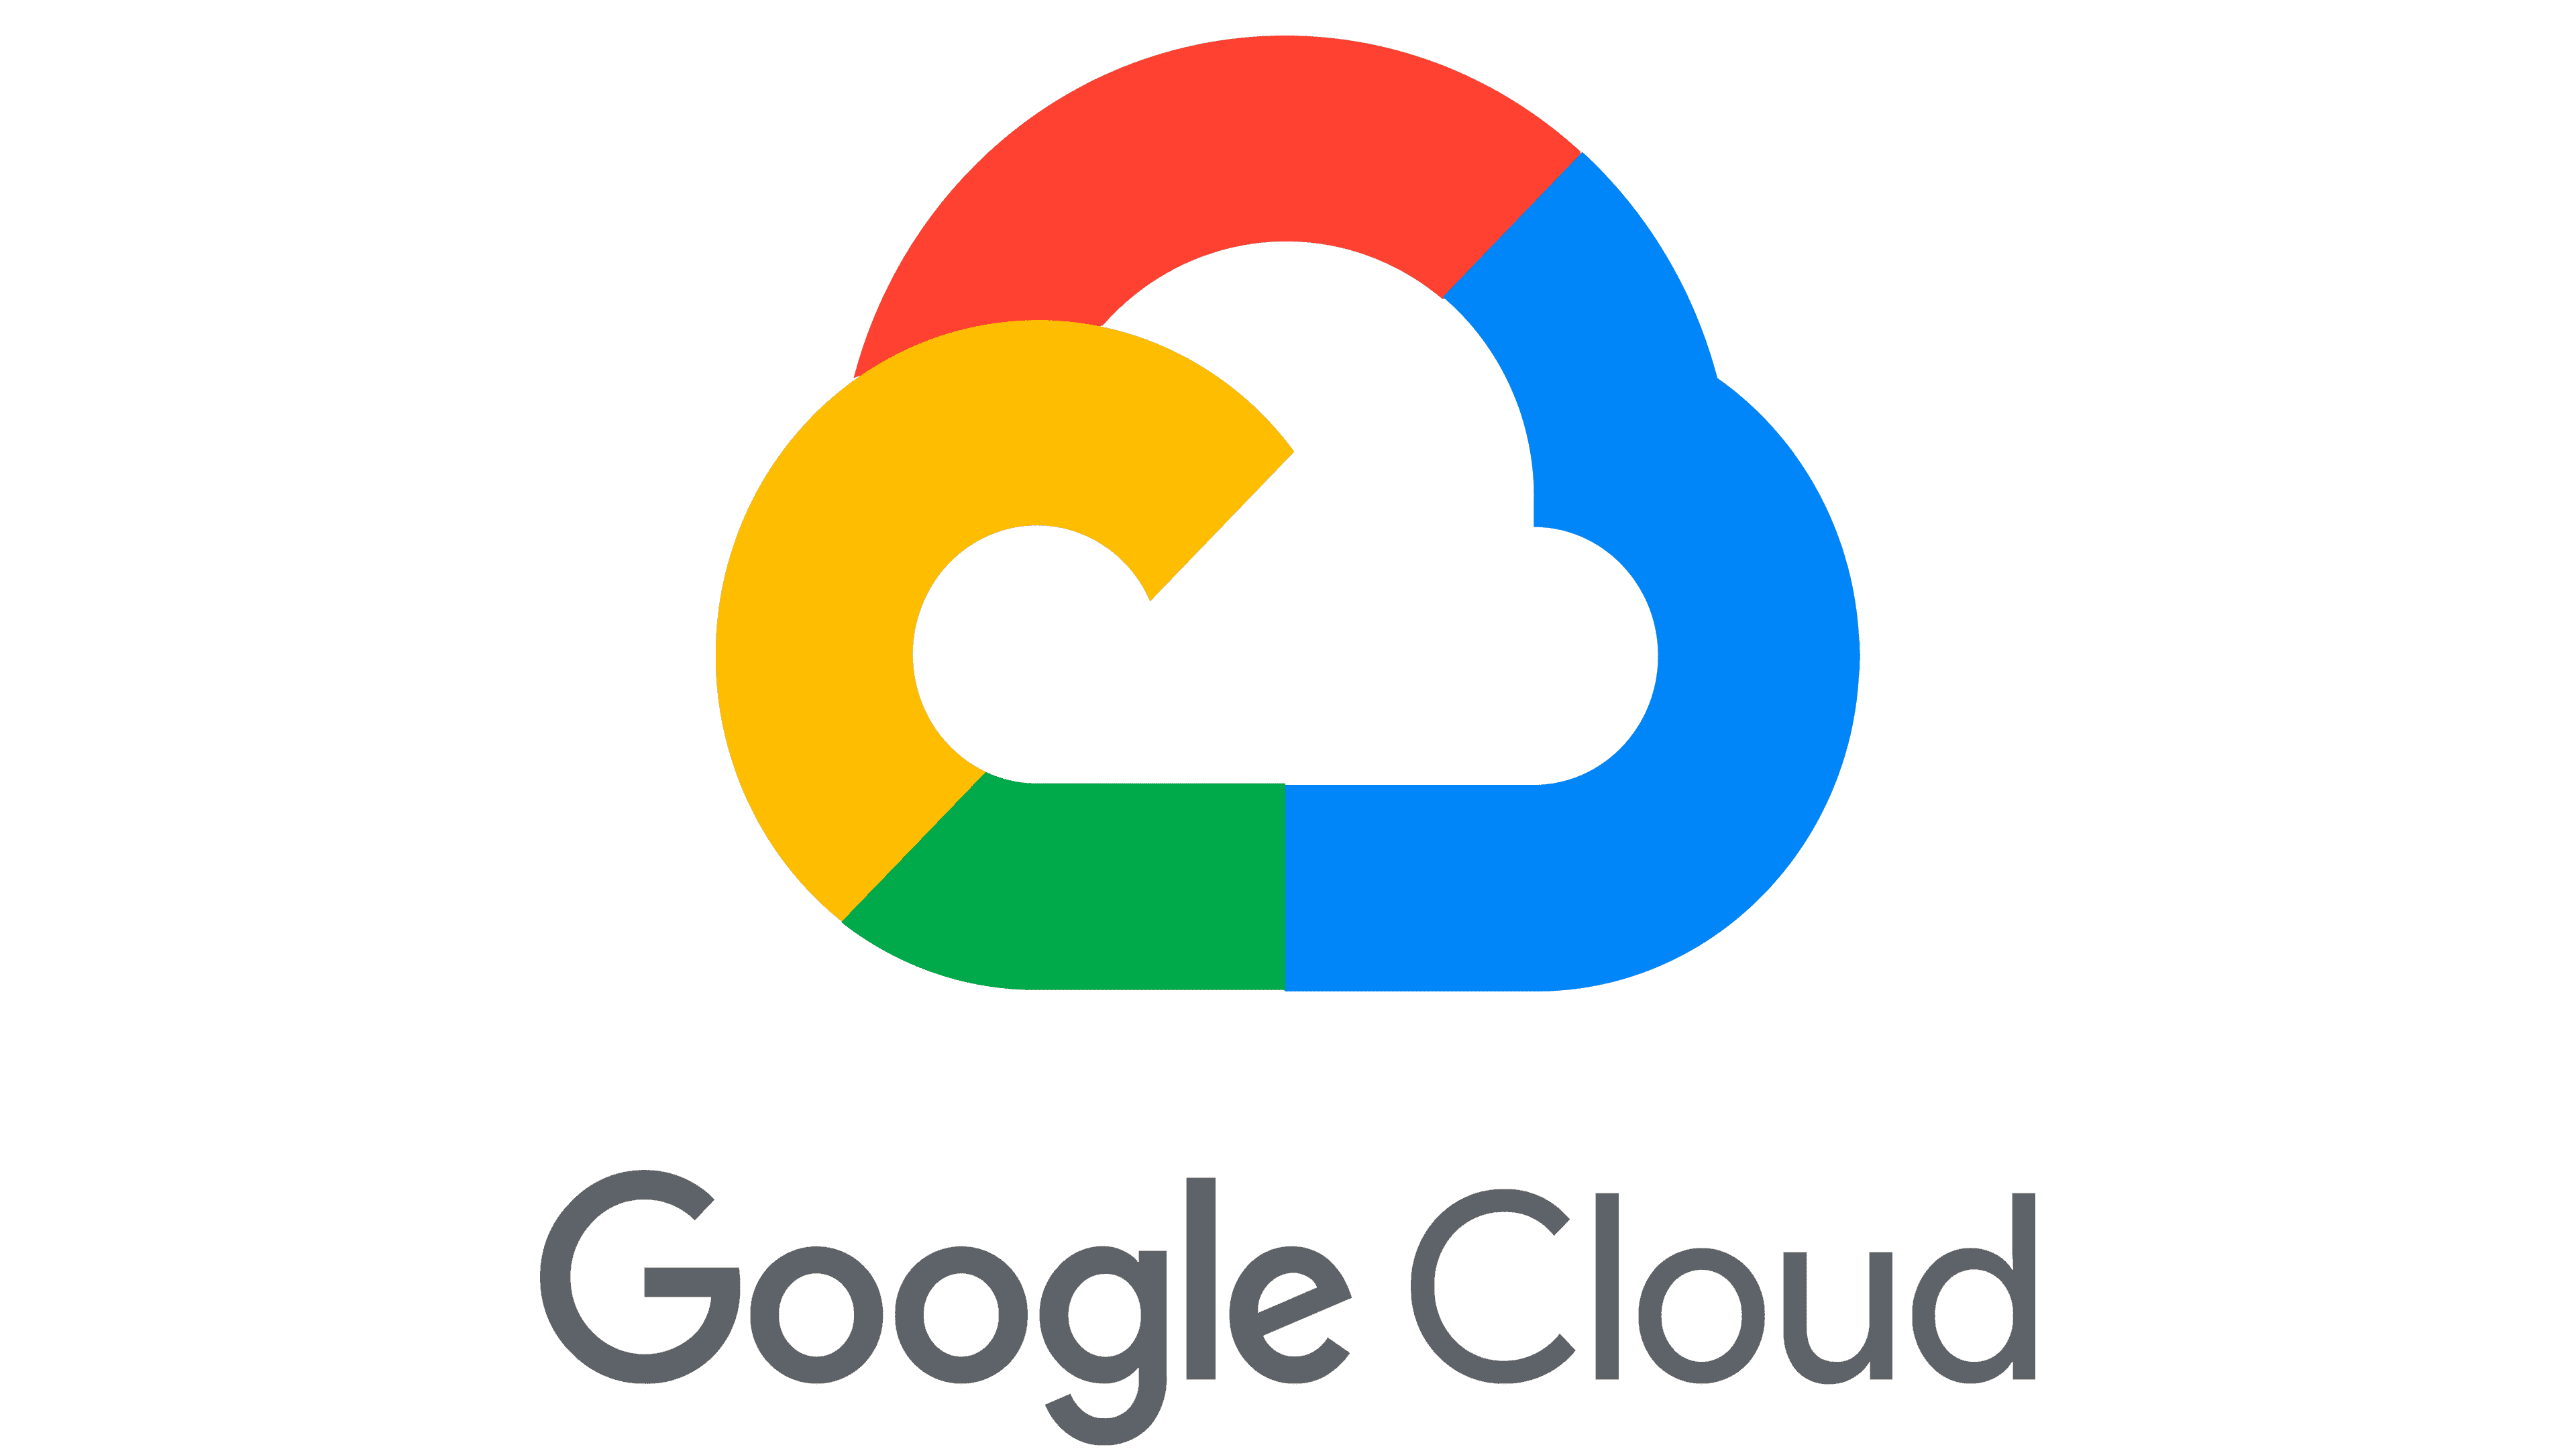 GoogleCloud Logo